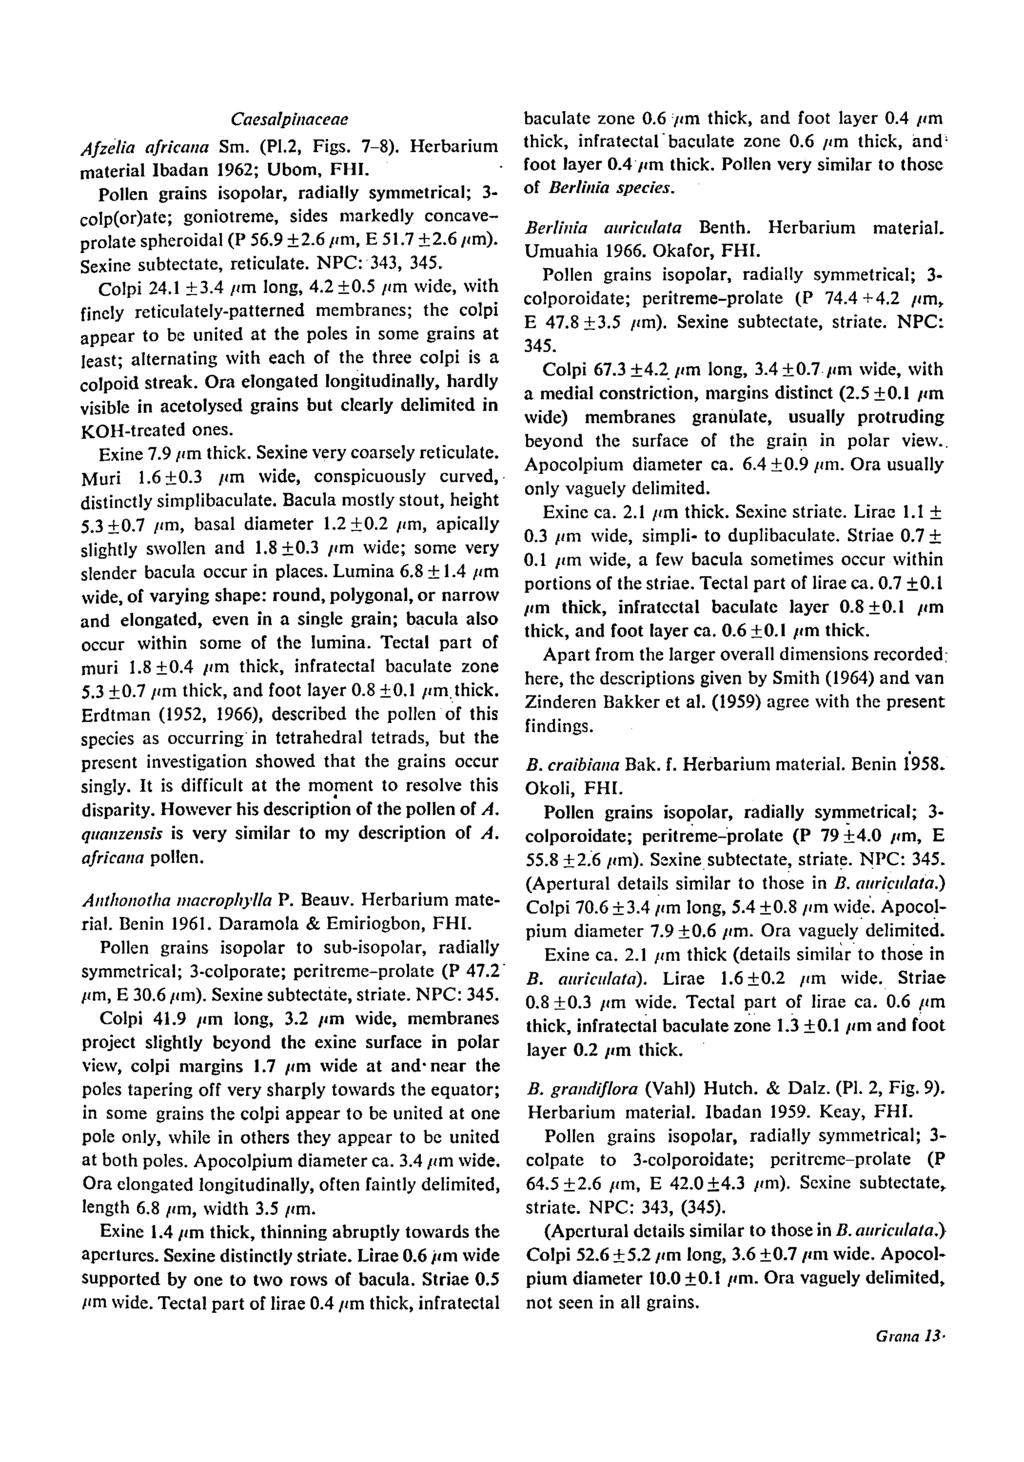 Cuesalpiiiaceue Afzeh ufricatia Sm. (P1.2, Figs. 7-8). Herbarium material lbadan 1962; Ubom, FHI.